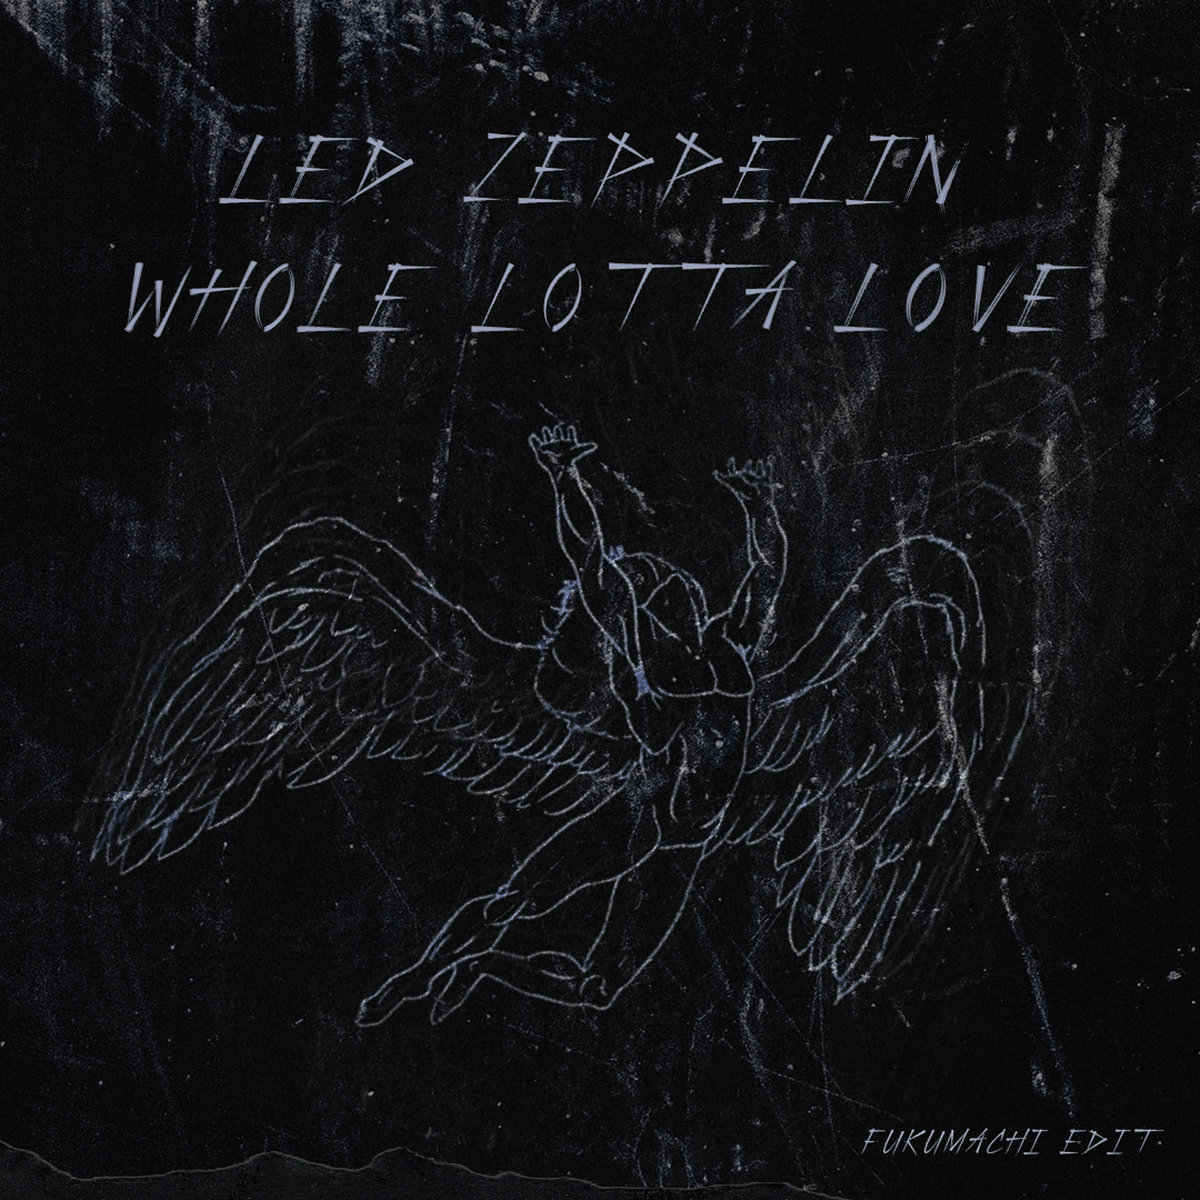 Led zeppelin's whole lotta love. 6ixmane. Альбом пол матери. 6ixmane - Motherlode. Обложки песен пол матери.